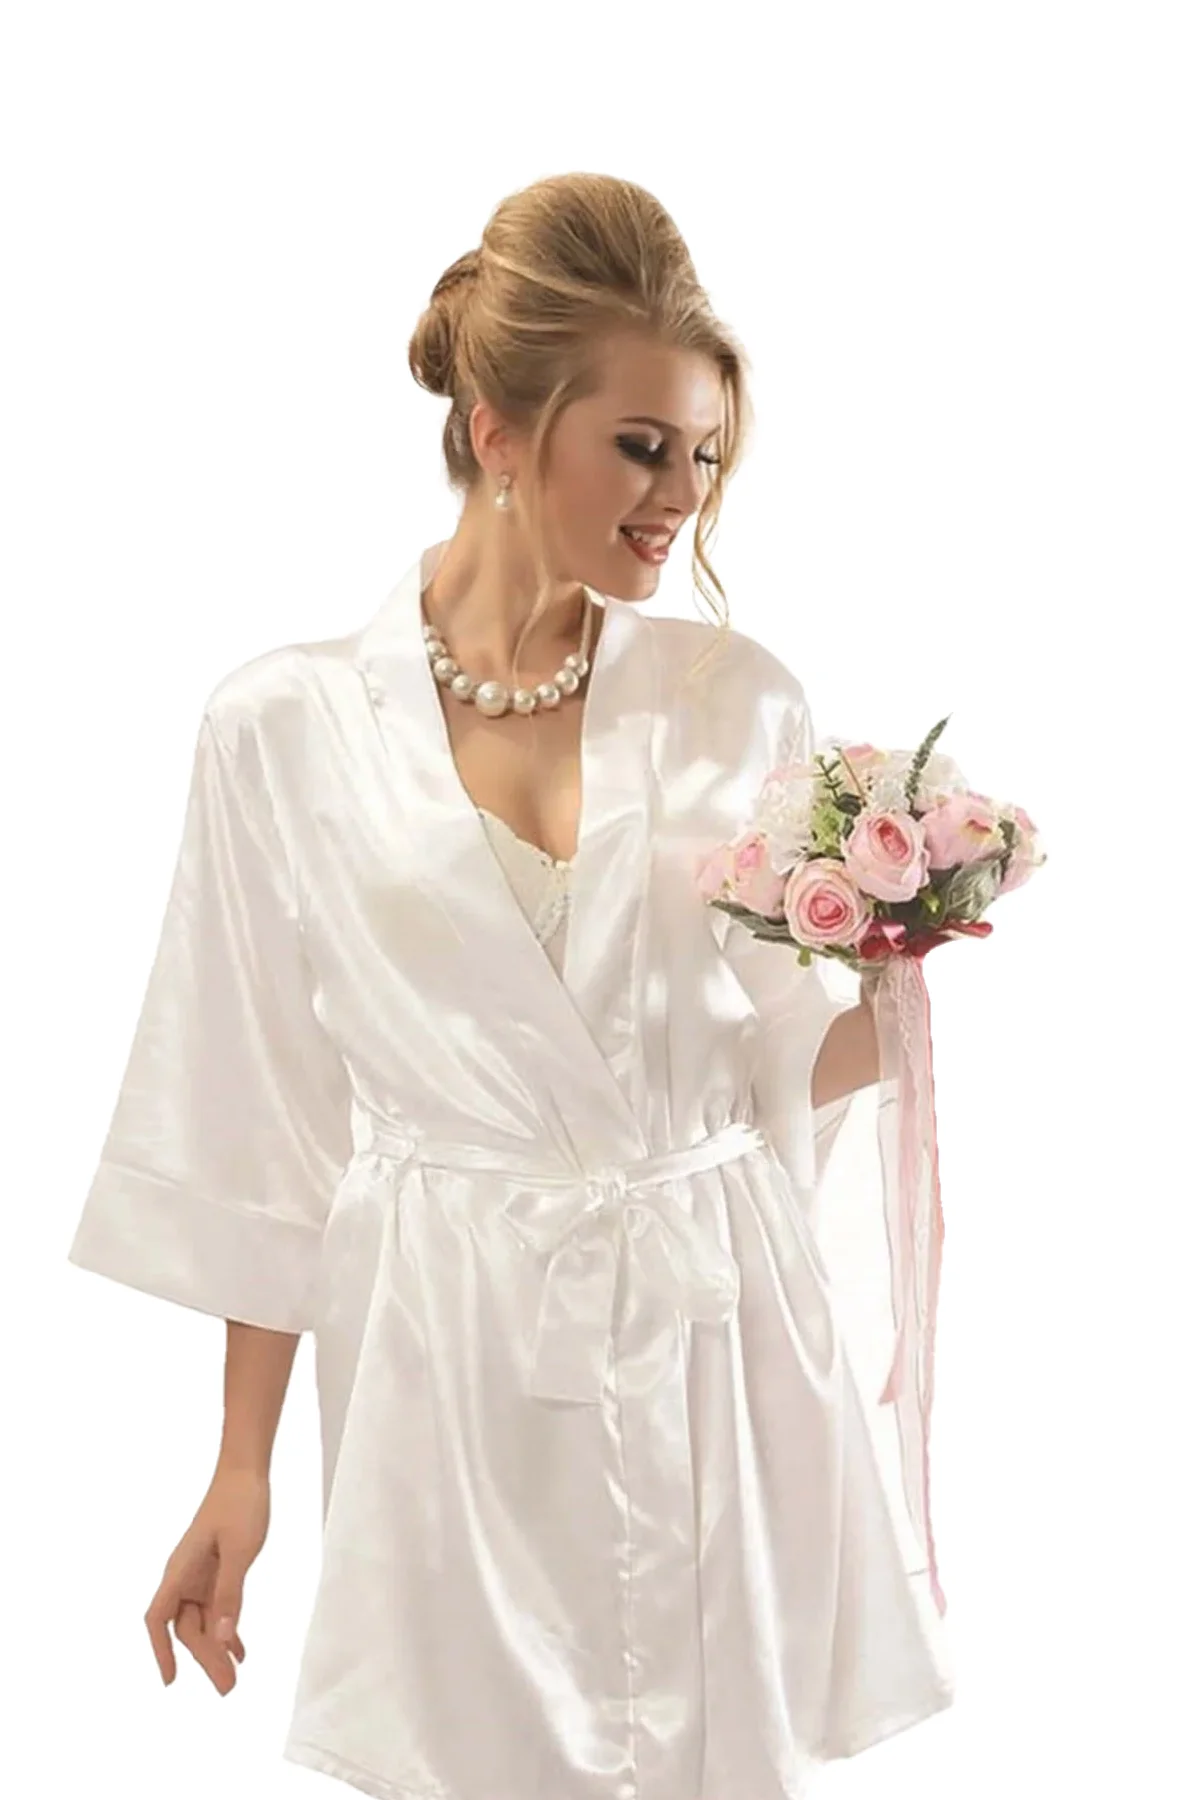 Nbb - Nbb 3232 Bride Gown Ecru